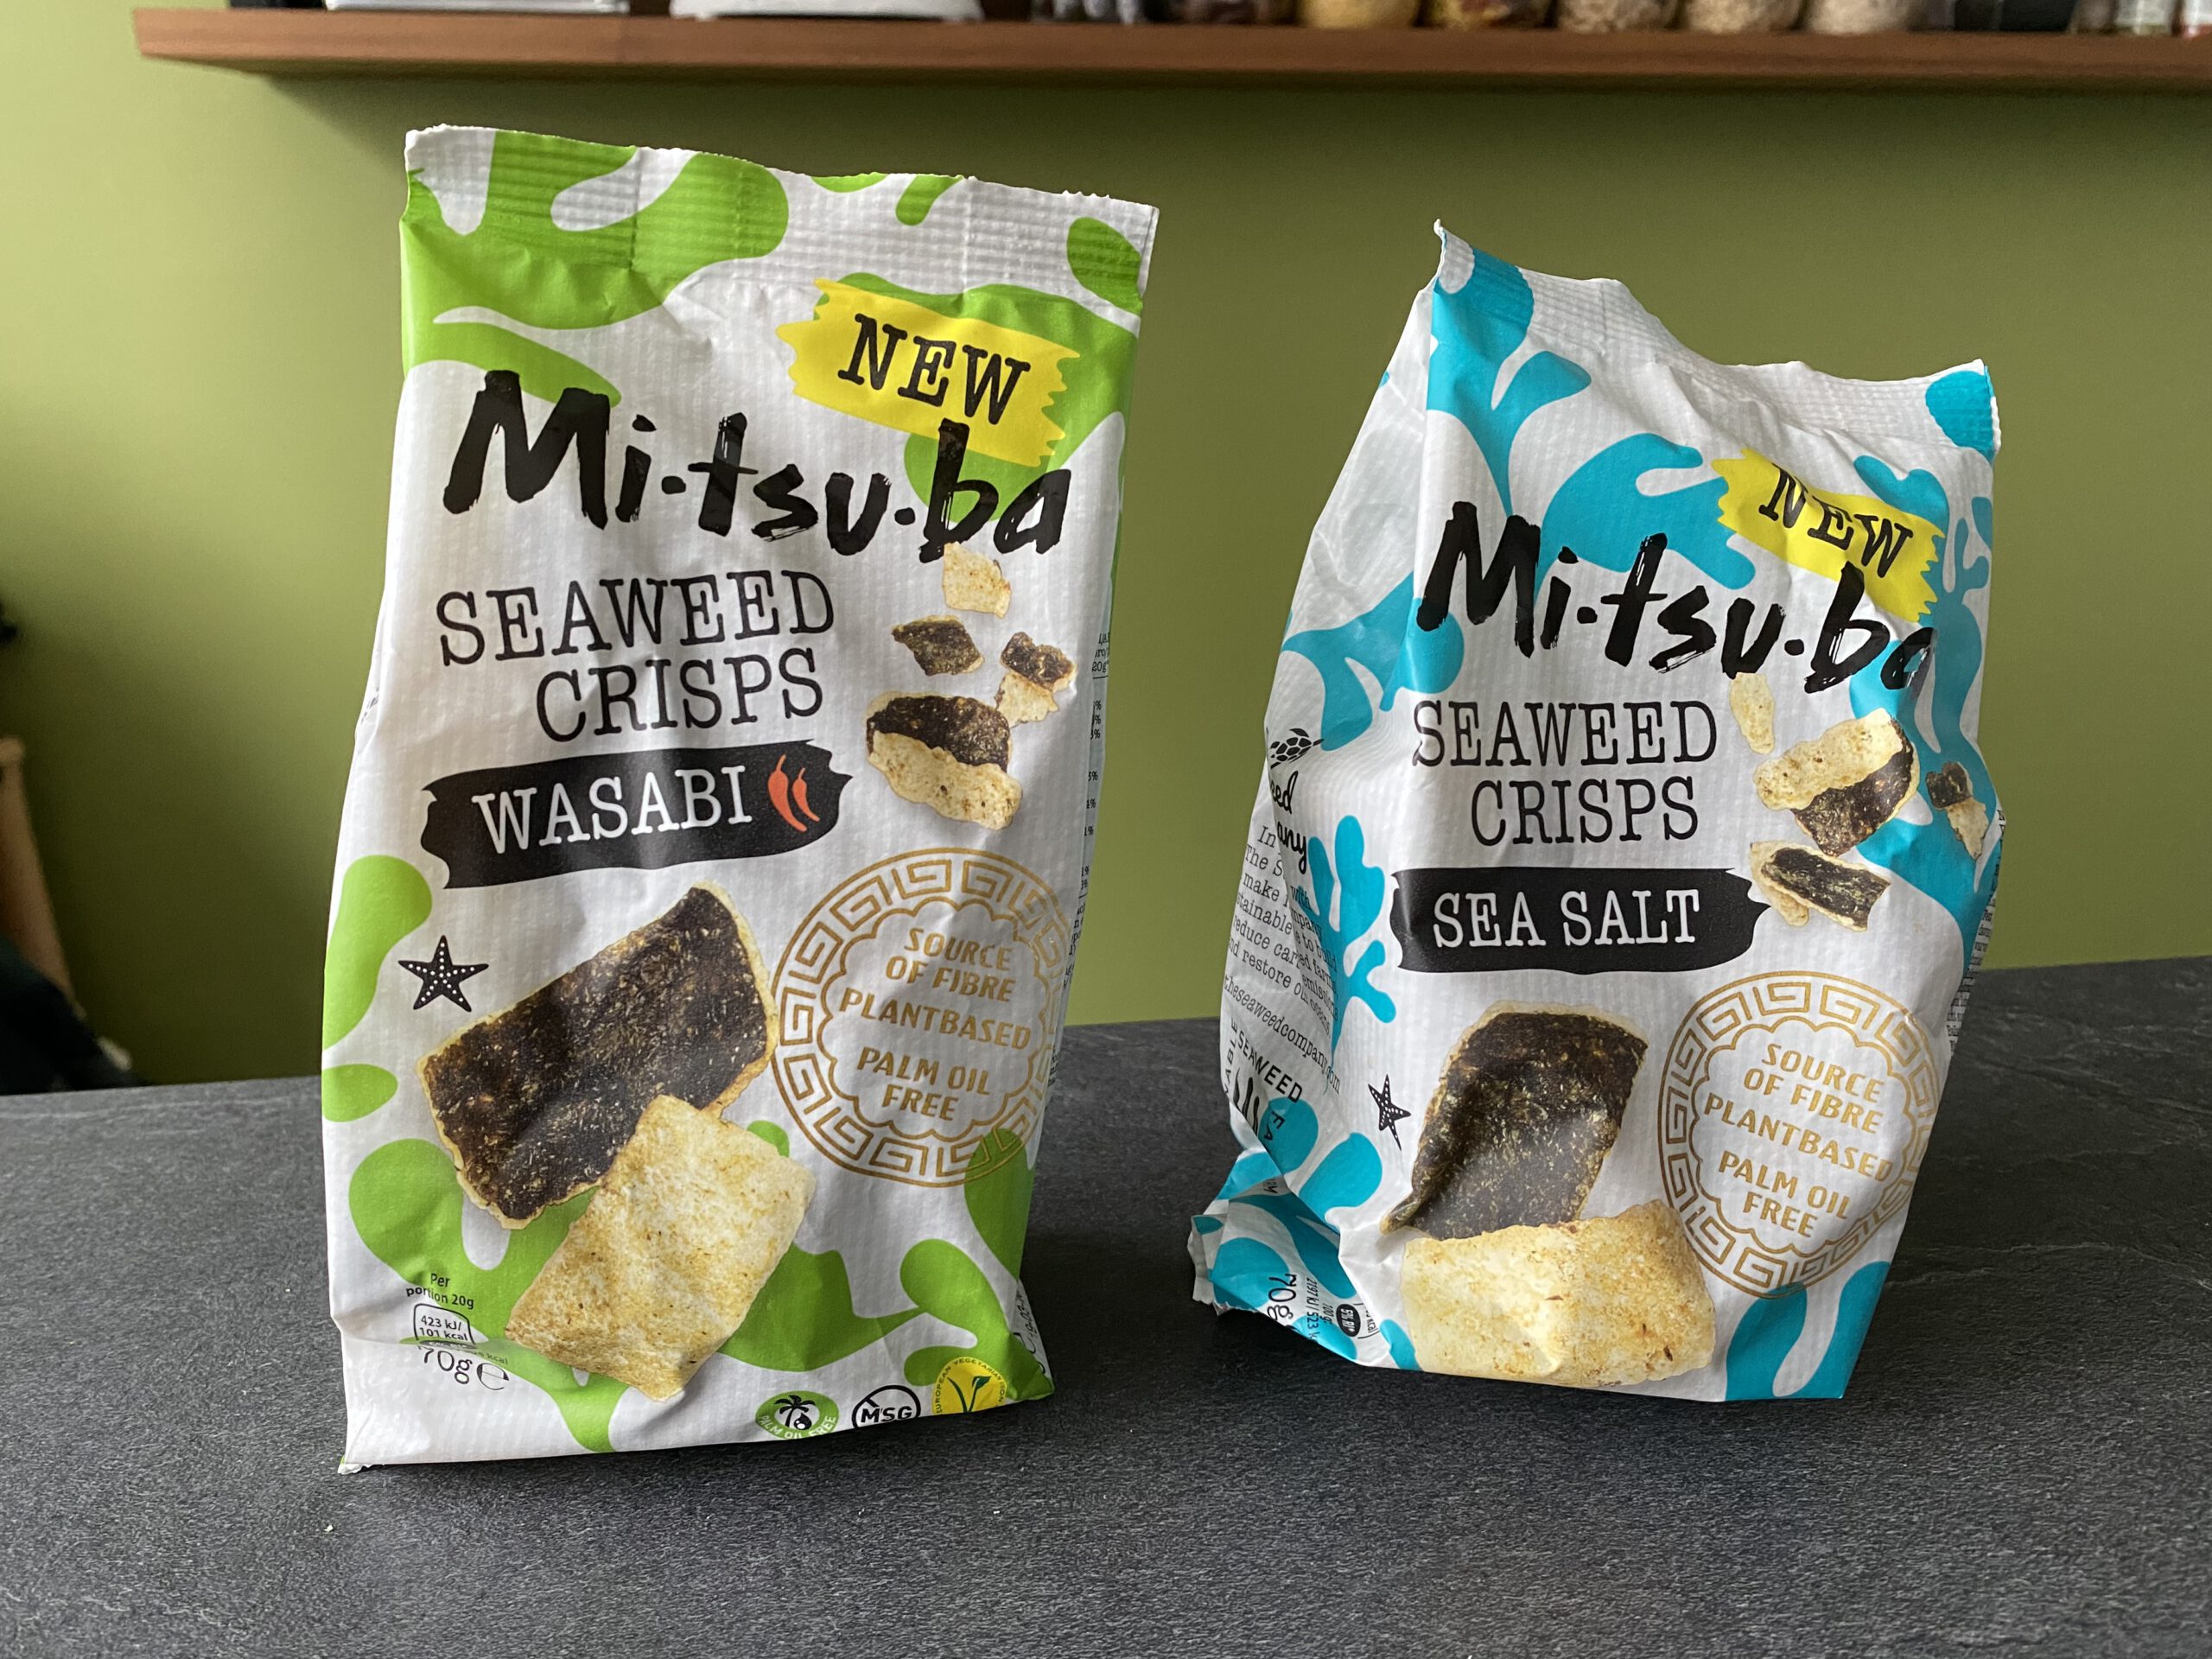 Mitsuba Seaweed Crisps Sea Salt & Mitsuba Seaweed Crisps Wasabi